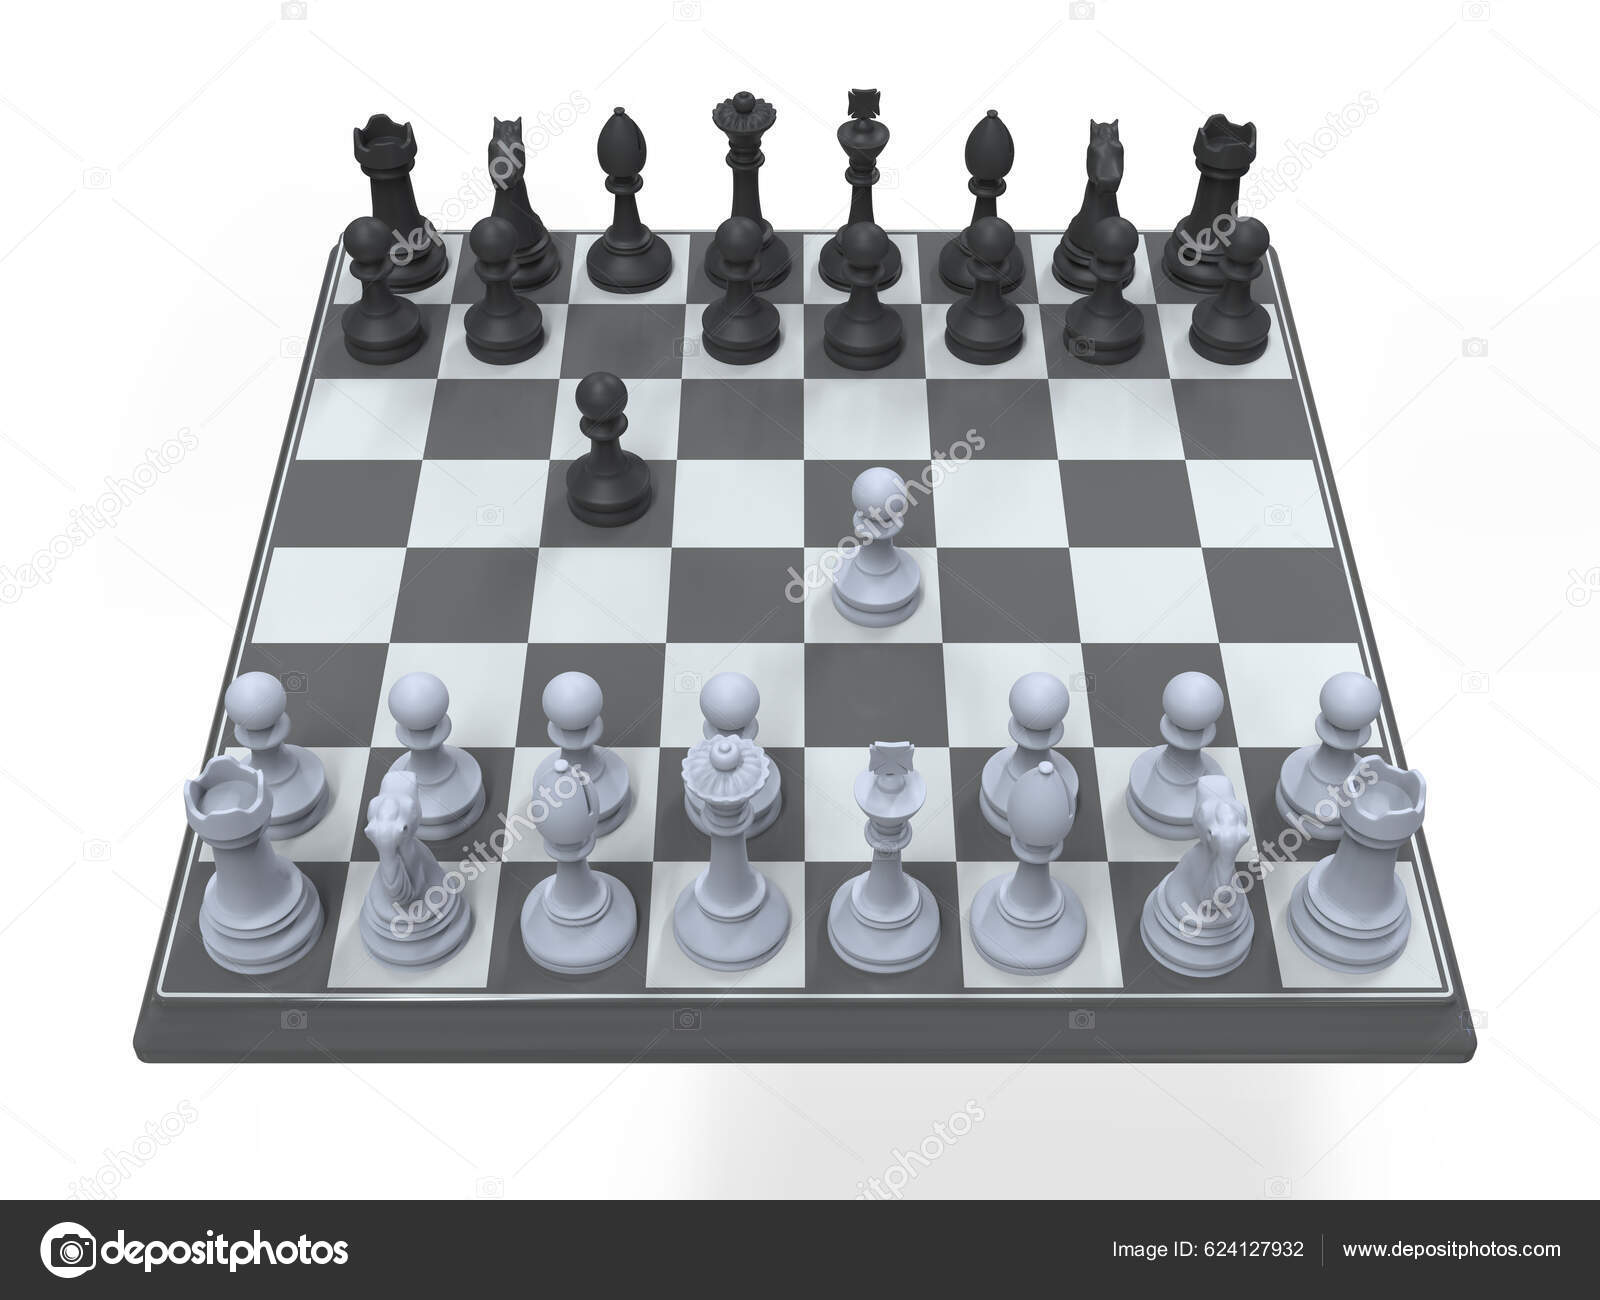 Sicilian Defense - Chess Openings 